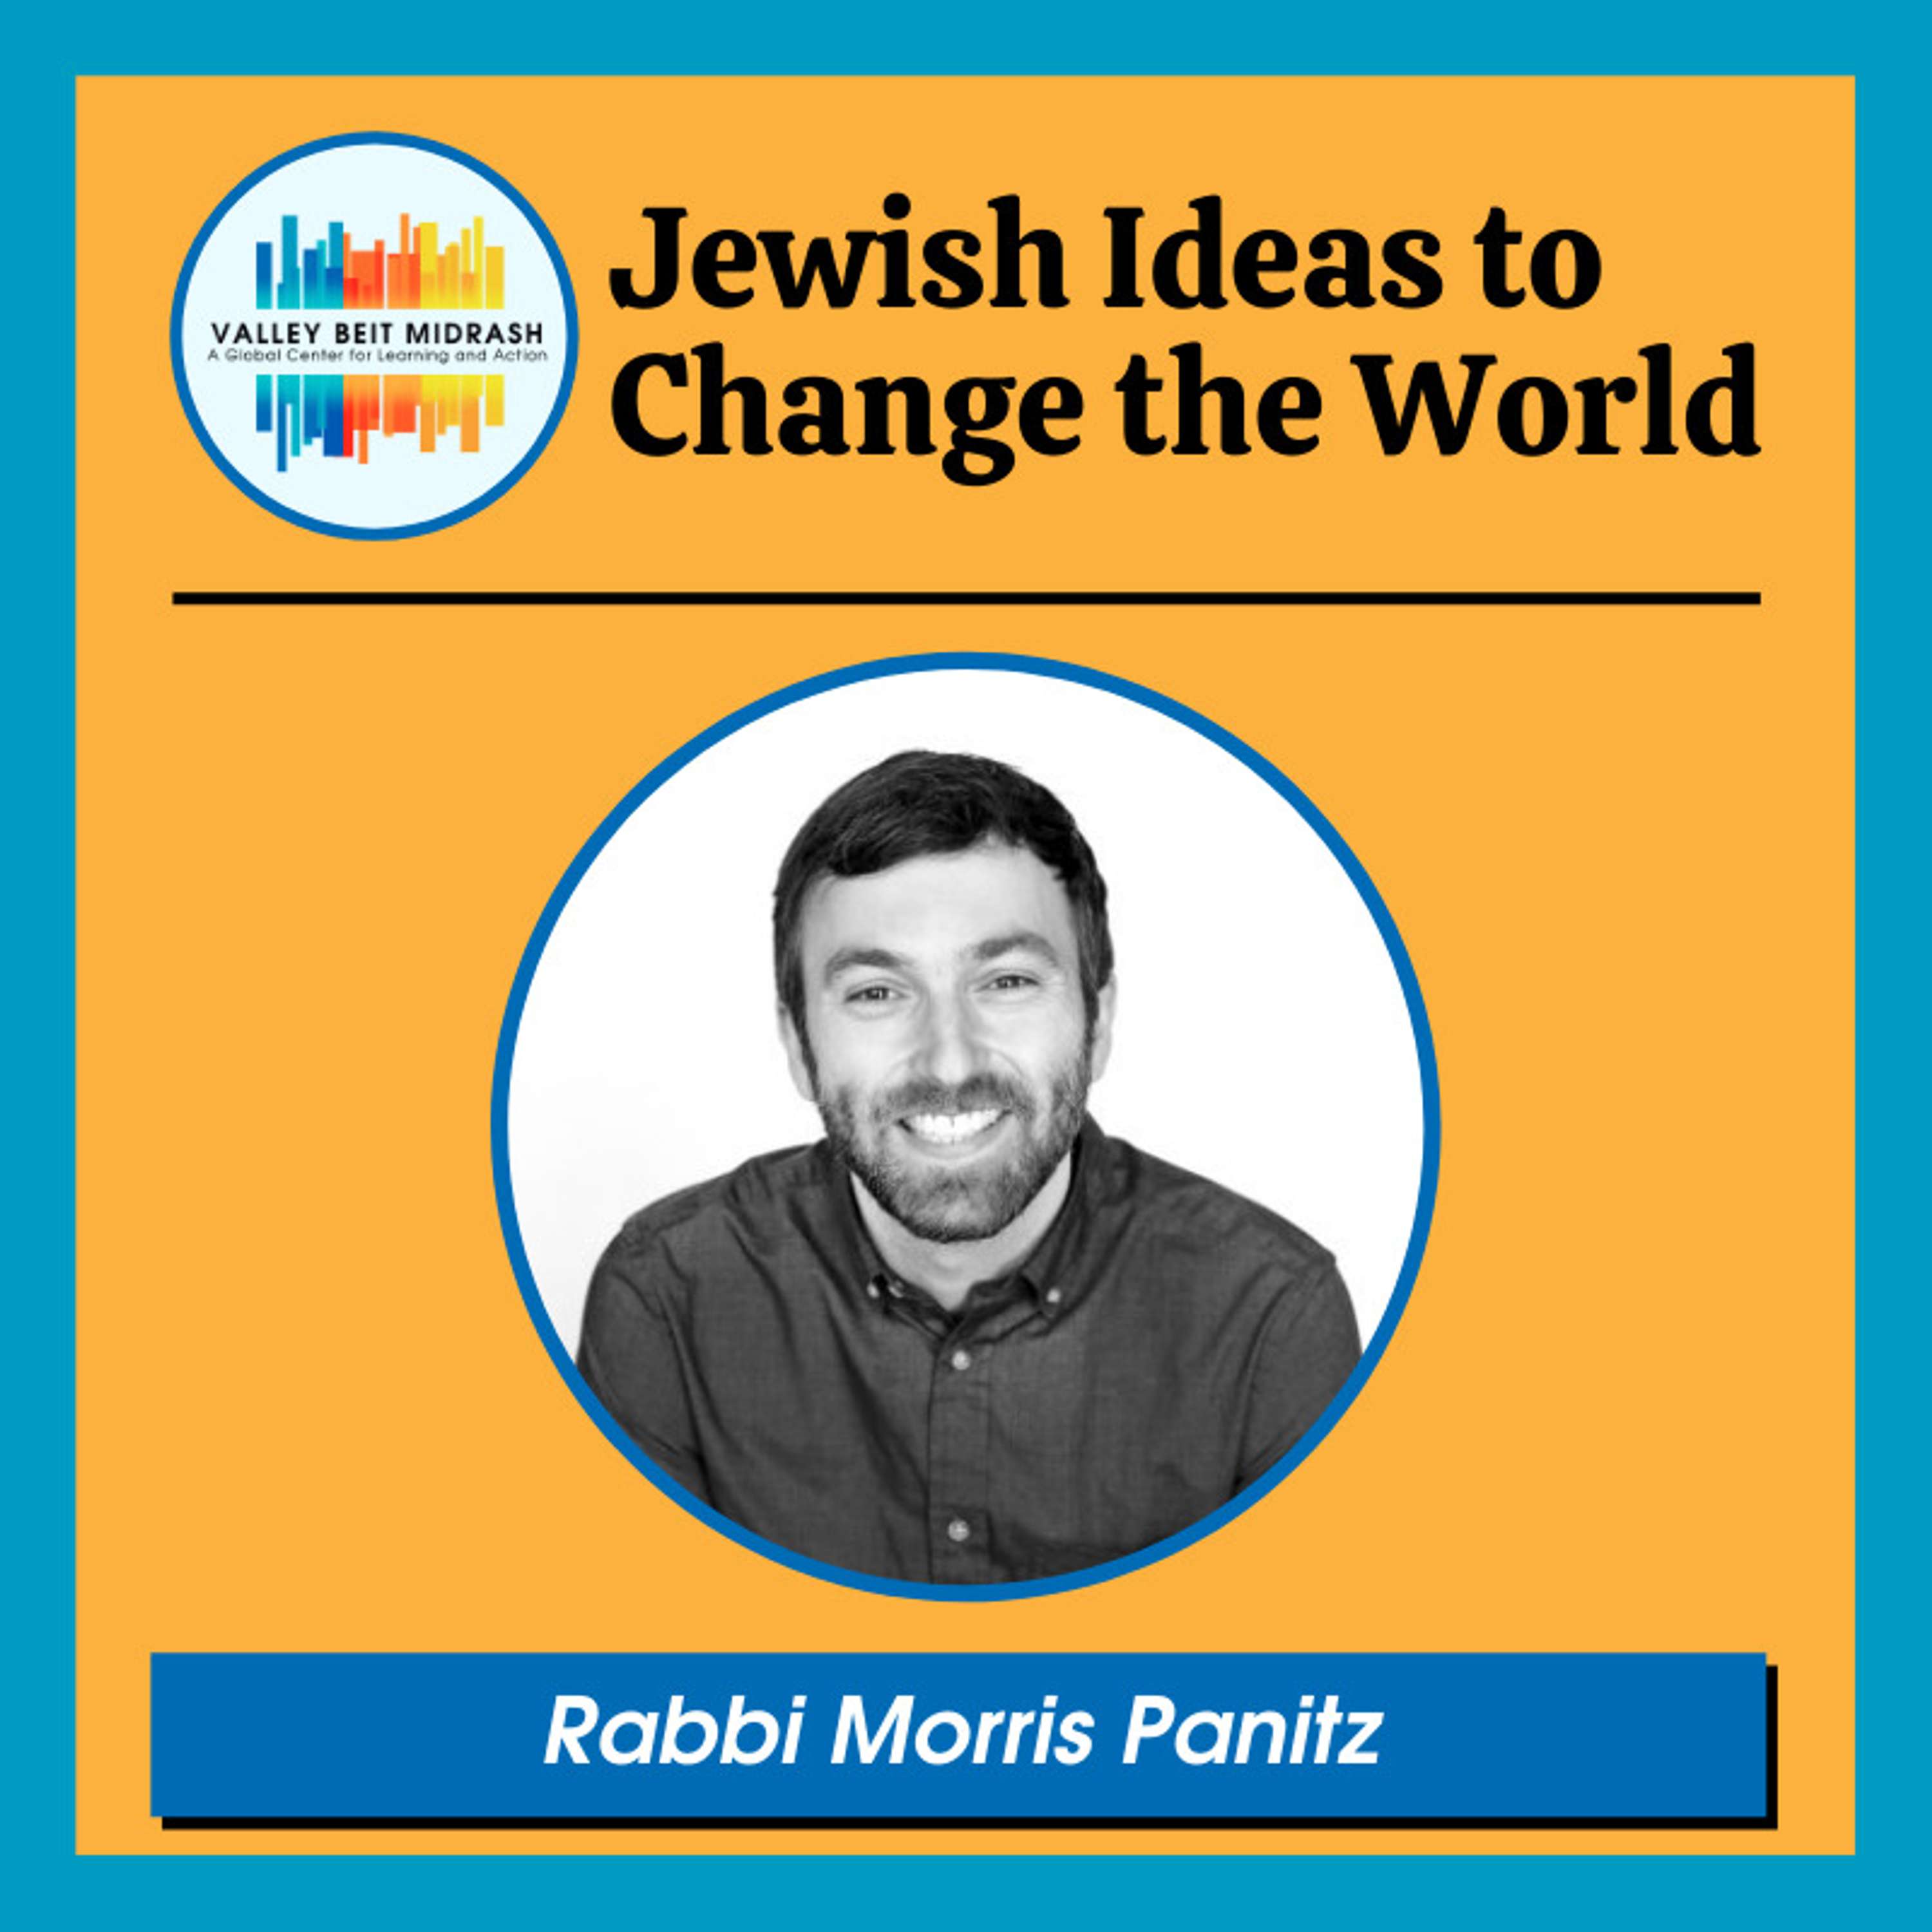 Finding God in Pain – Rabbi Morris Panitz